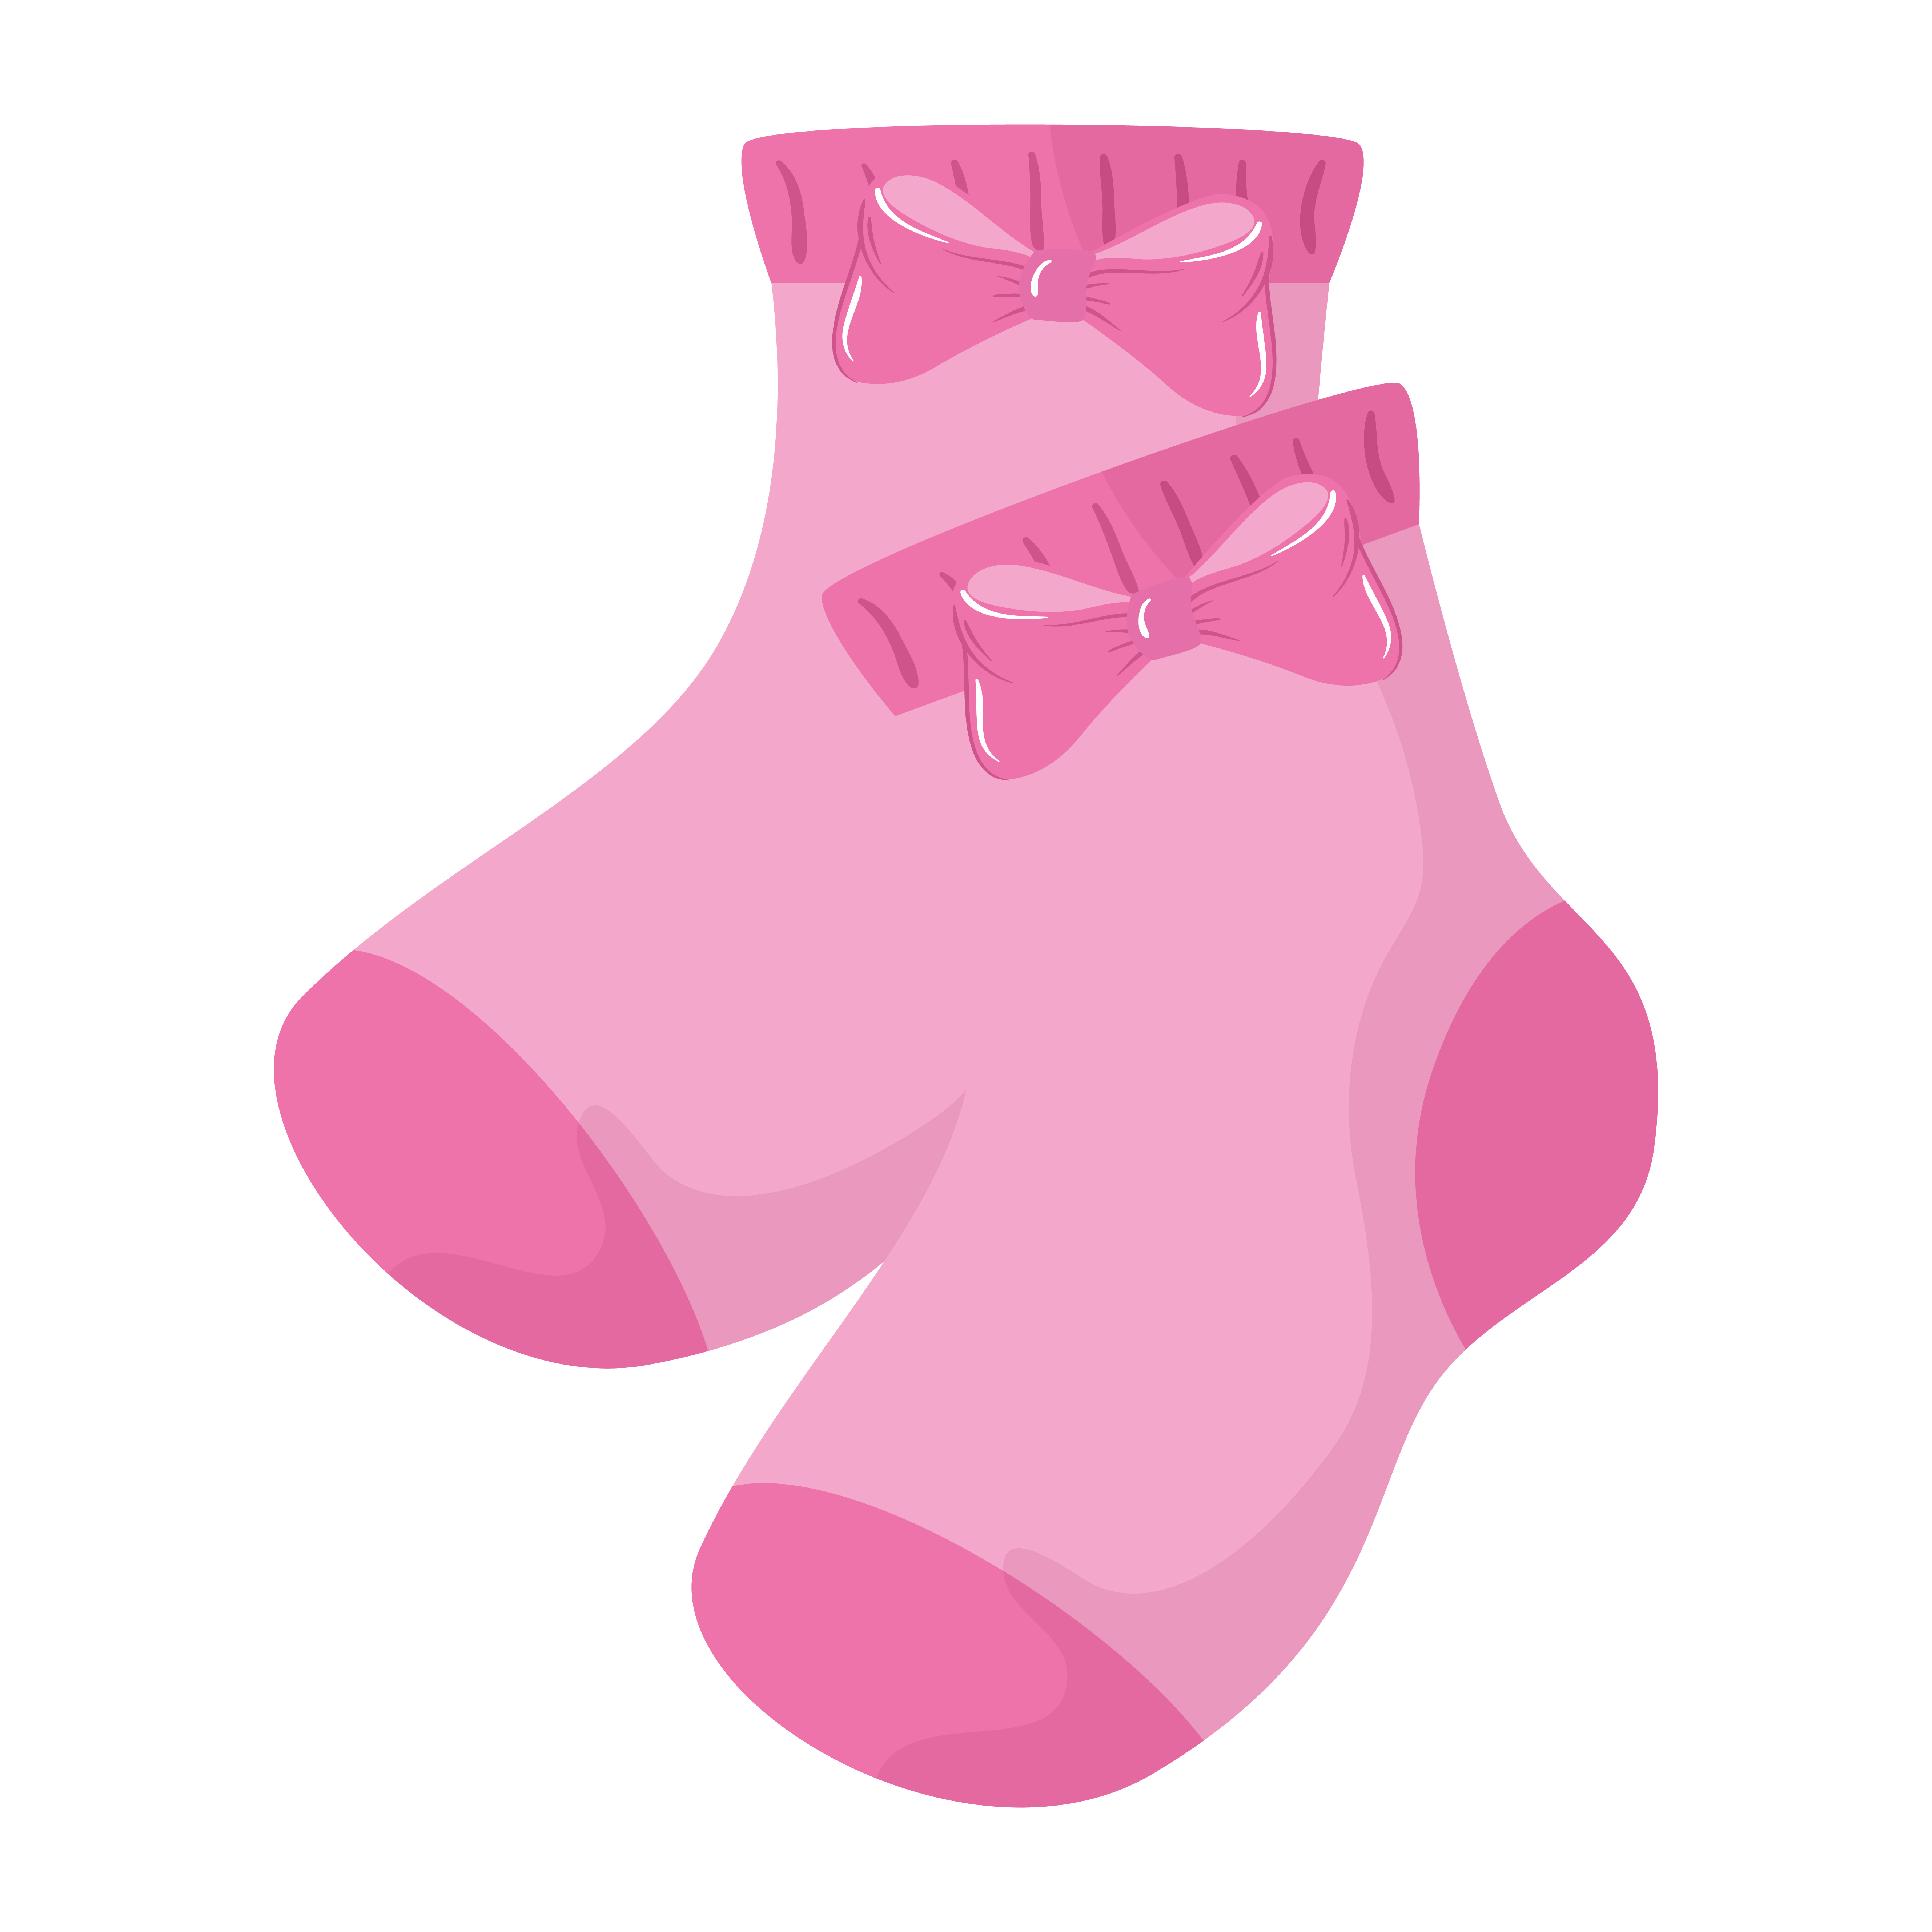 Premium Vector  Pink baby socks watercolor illustration vector illustration